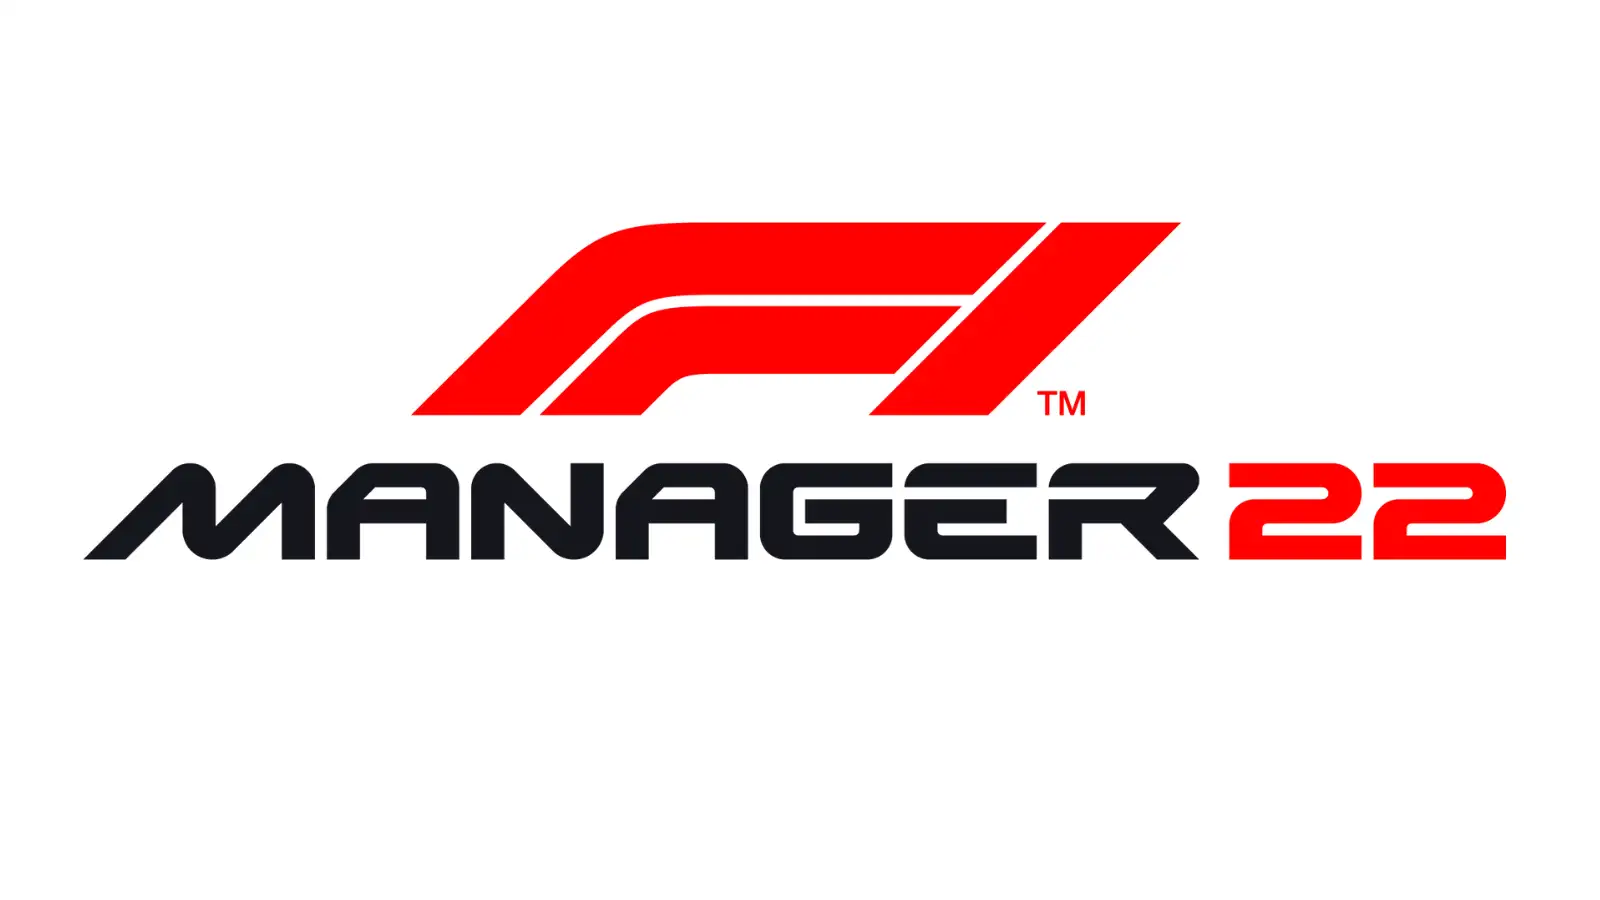 F1 Manager 2022 logo.